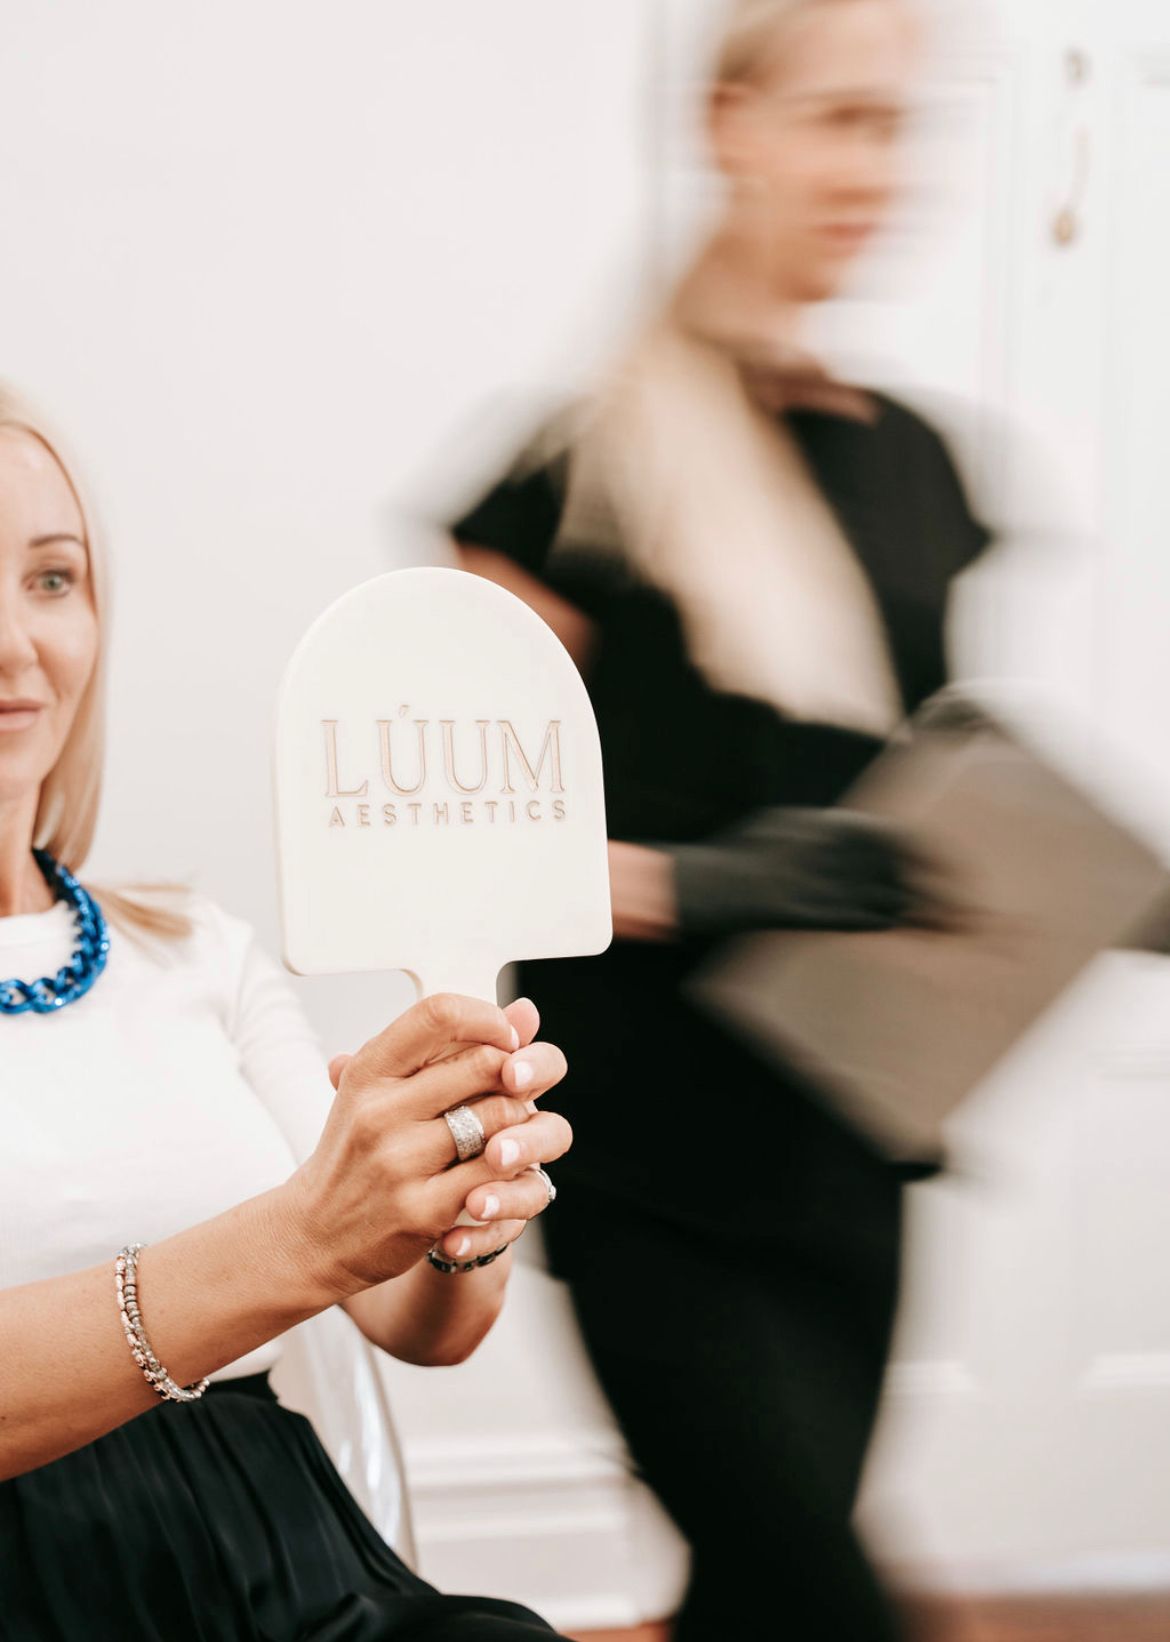 Beauty Salon Photo Shoot with Customer holding Personalised Handheld Mirror with Custom Branding for Luum Aesthetics - Boho & Brave Perth